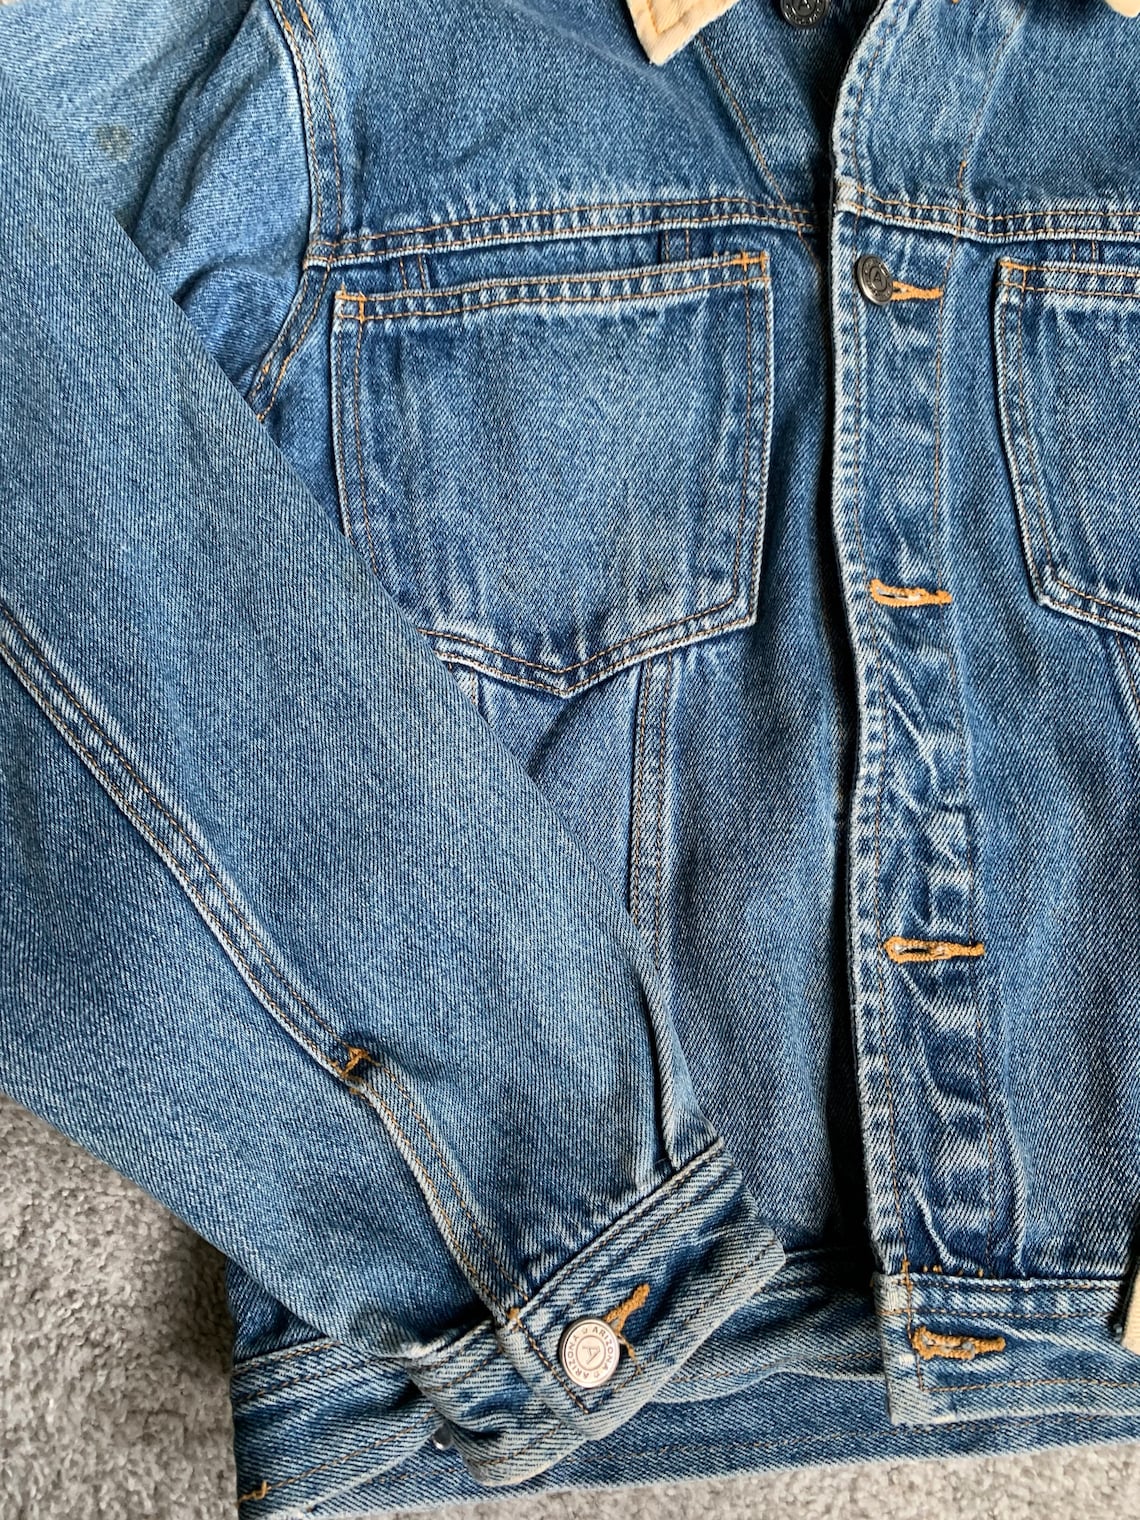 Vintage Arizona Jeans Denim Jacket | Etsy